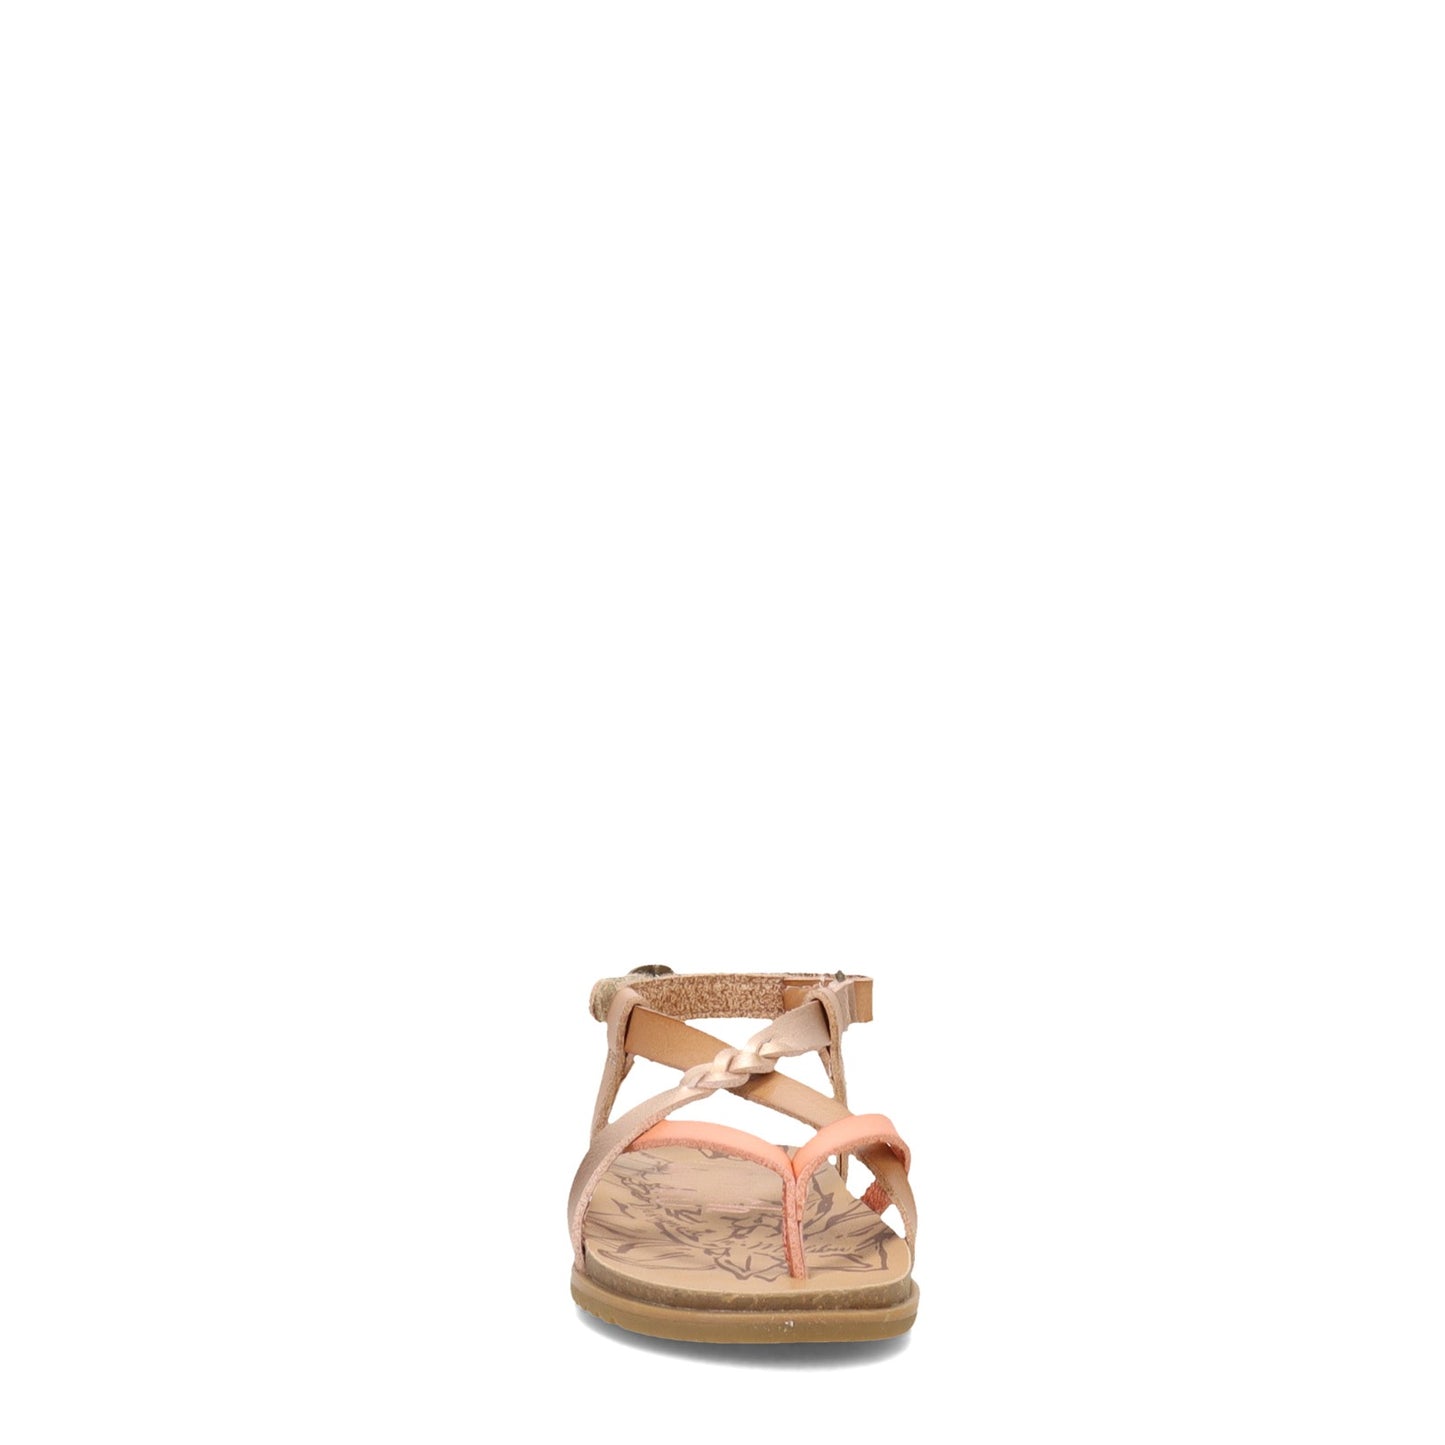 Peltz Shoes  Girl's Blowfish Malibu Mixo-T Sandal - Toddler & Little Kid PINK MULTI BF-9928T 859